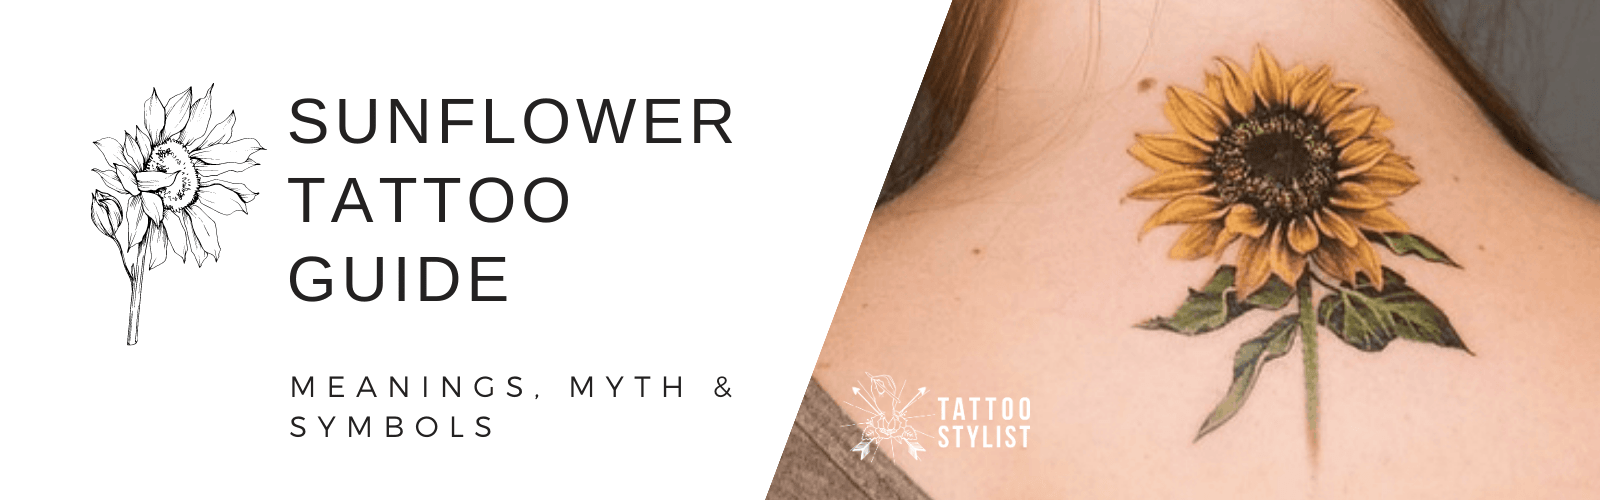 Sunflower Tattoo - Ideas To Spark Your Floral Tattoo - Tattoo Stylist